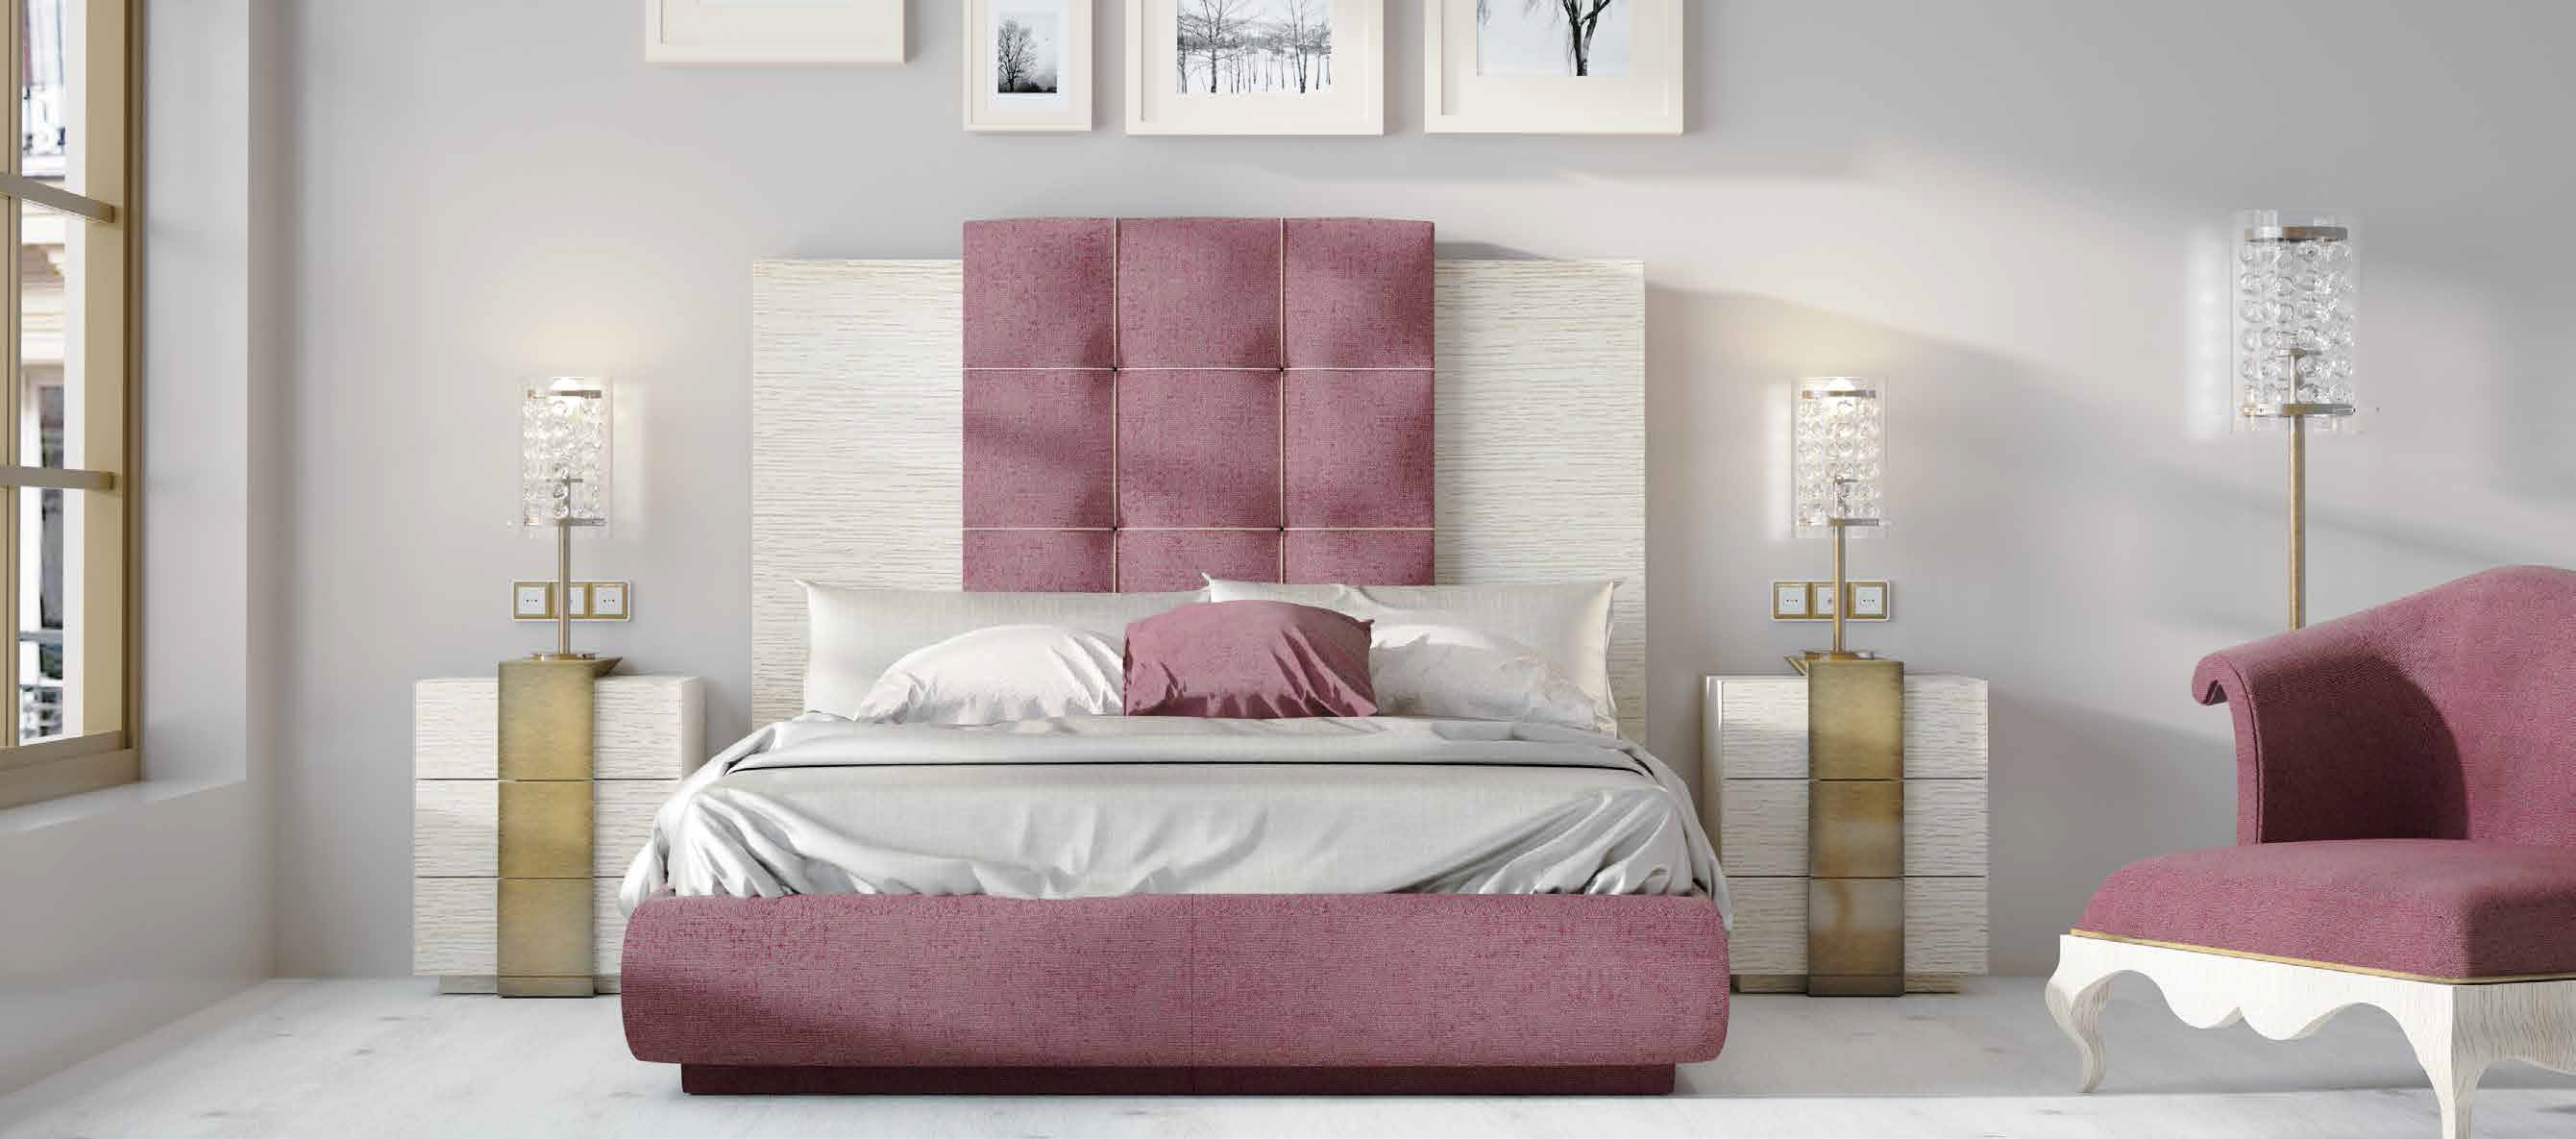 Brands Franco Furniture Bedrooms vol3, Spain DOR 11